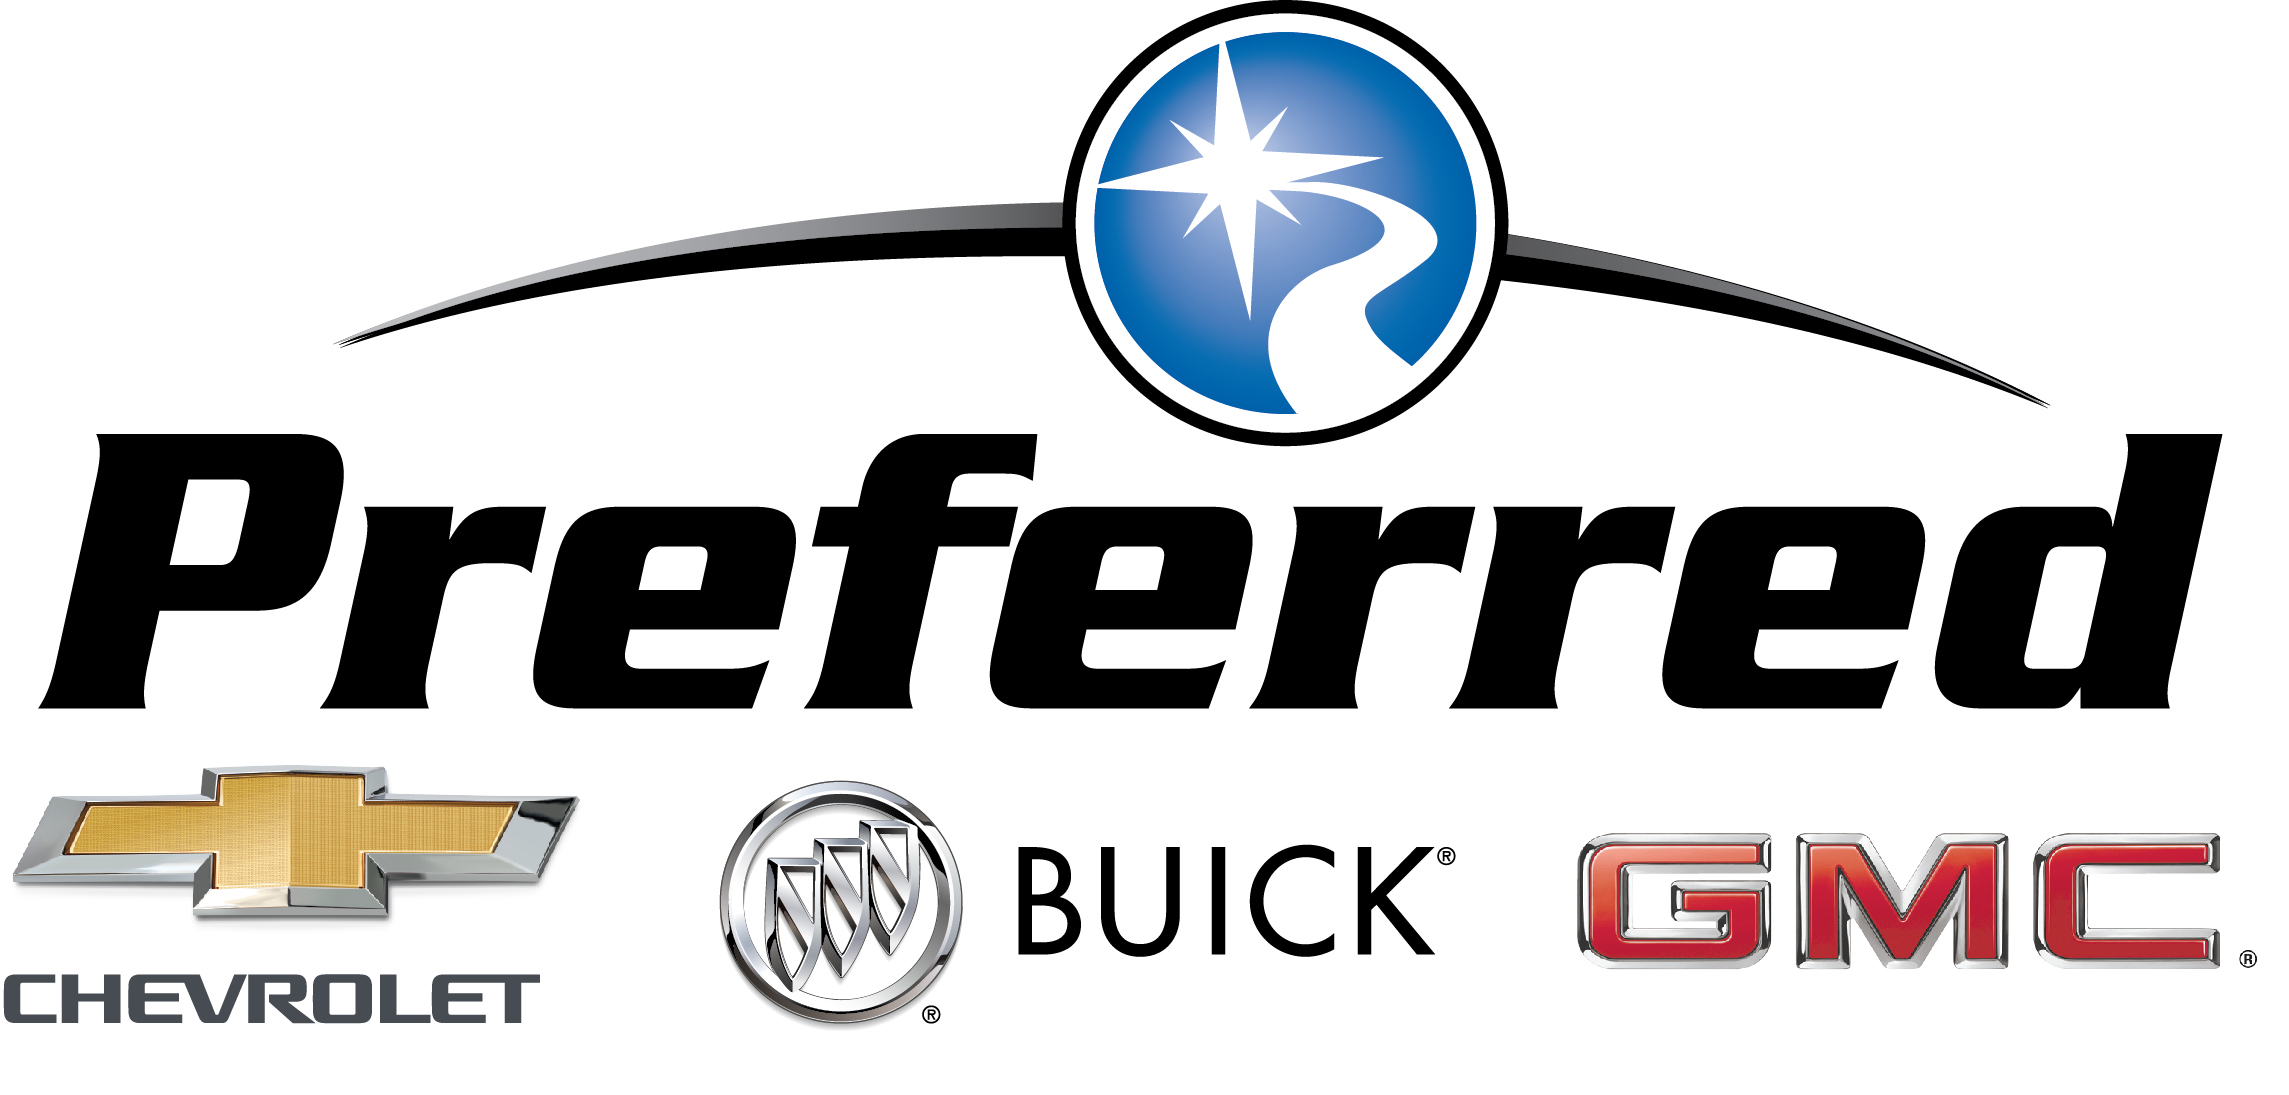 Preferred Chevrolet Buick GMC Logo